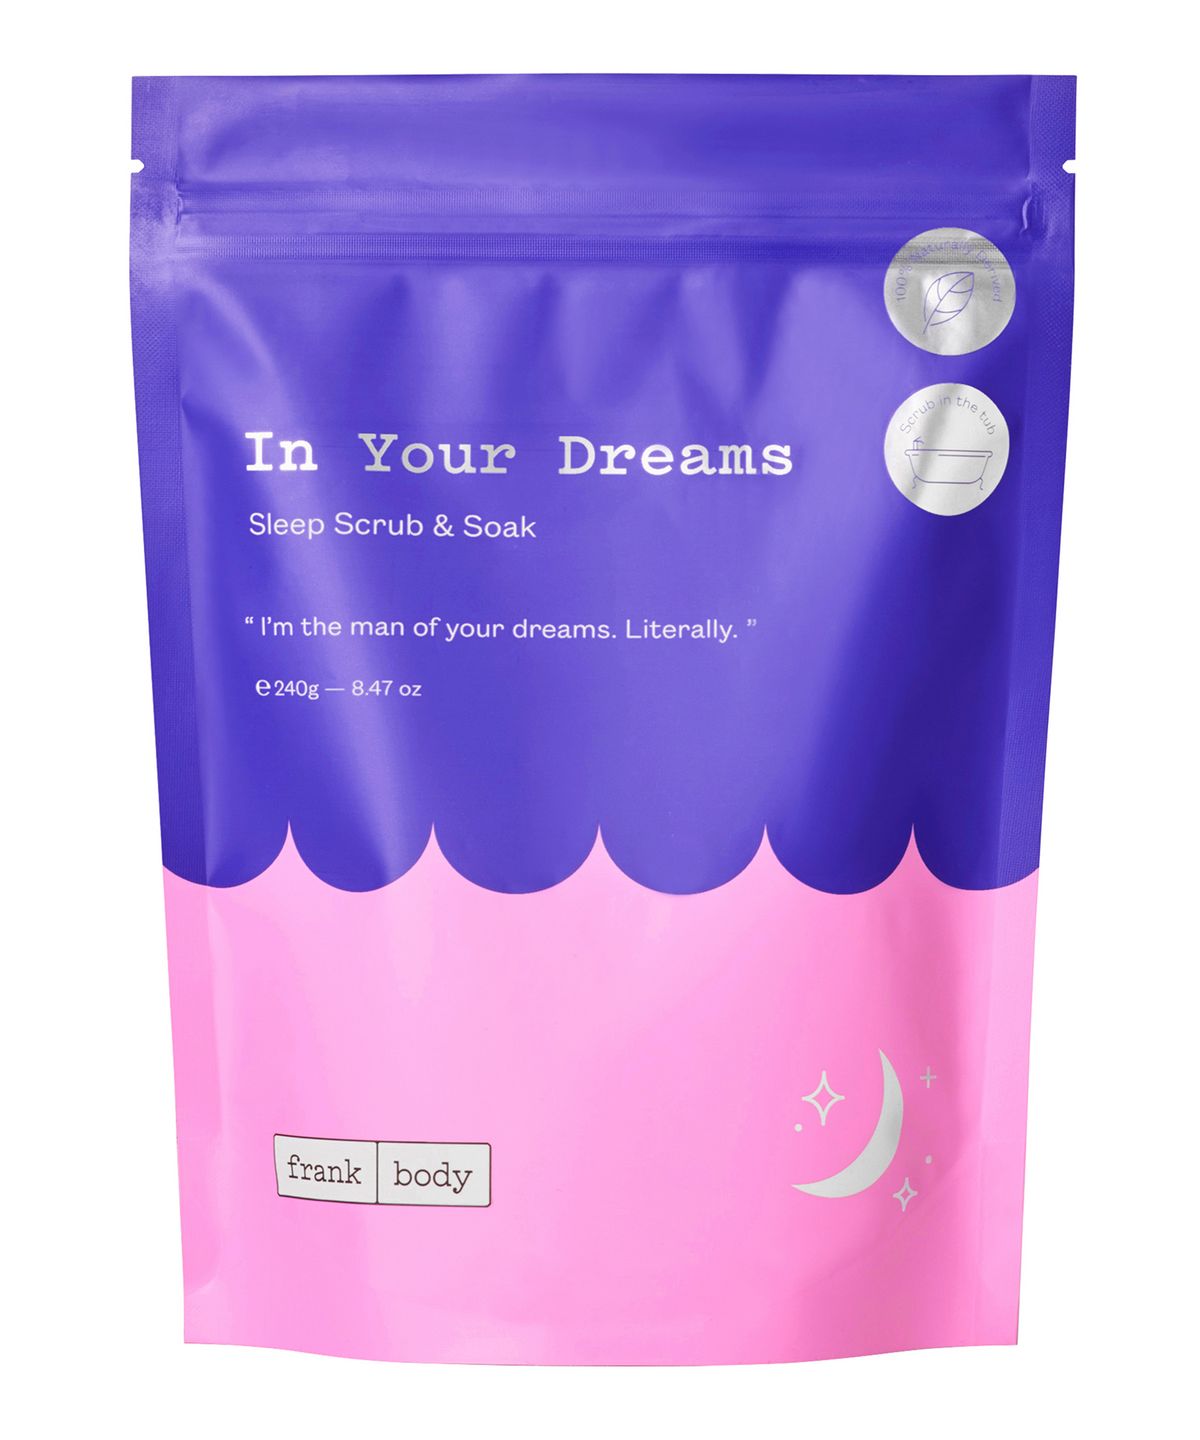 FRANK BODY - IN YOUR DREAMS SLEEP SCRUB & SOAK -  Kūno šveitiklis - vonios druska 240g - Kvepaline.lt